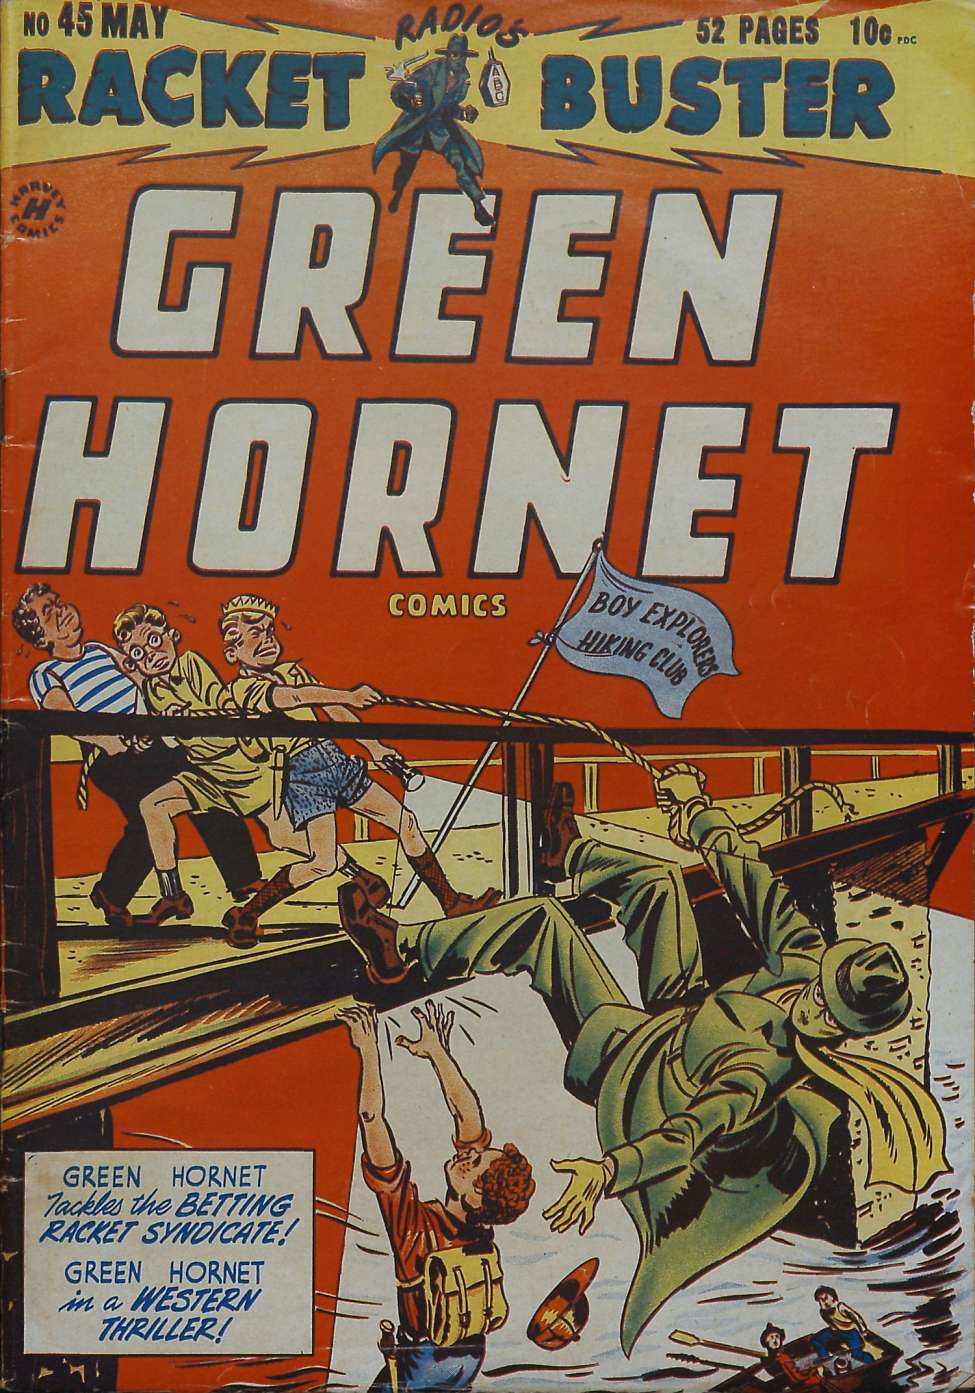 Comic Book Cover For Green Hornet, Racket Buster 45